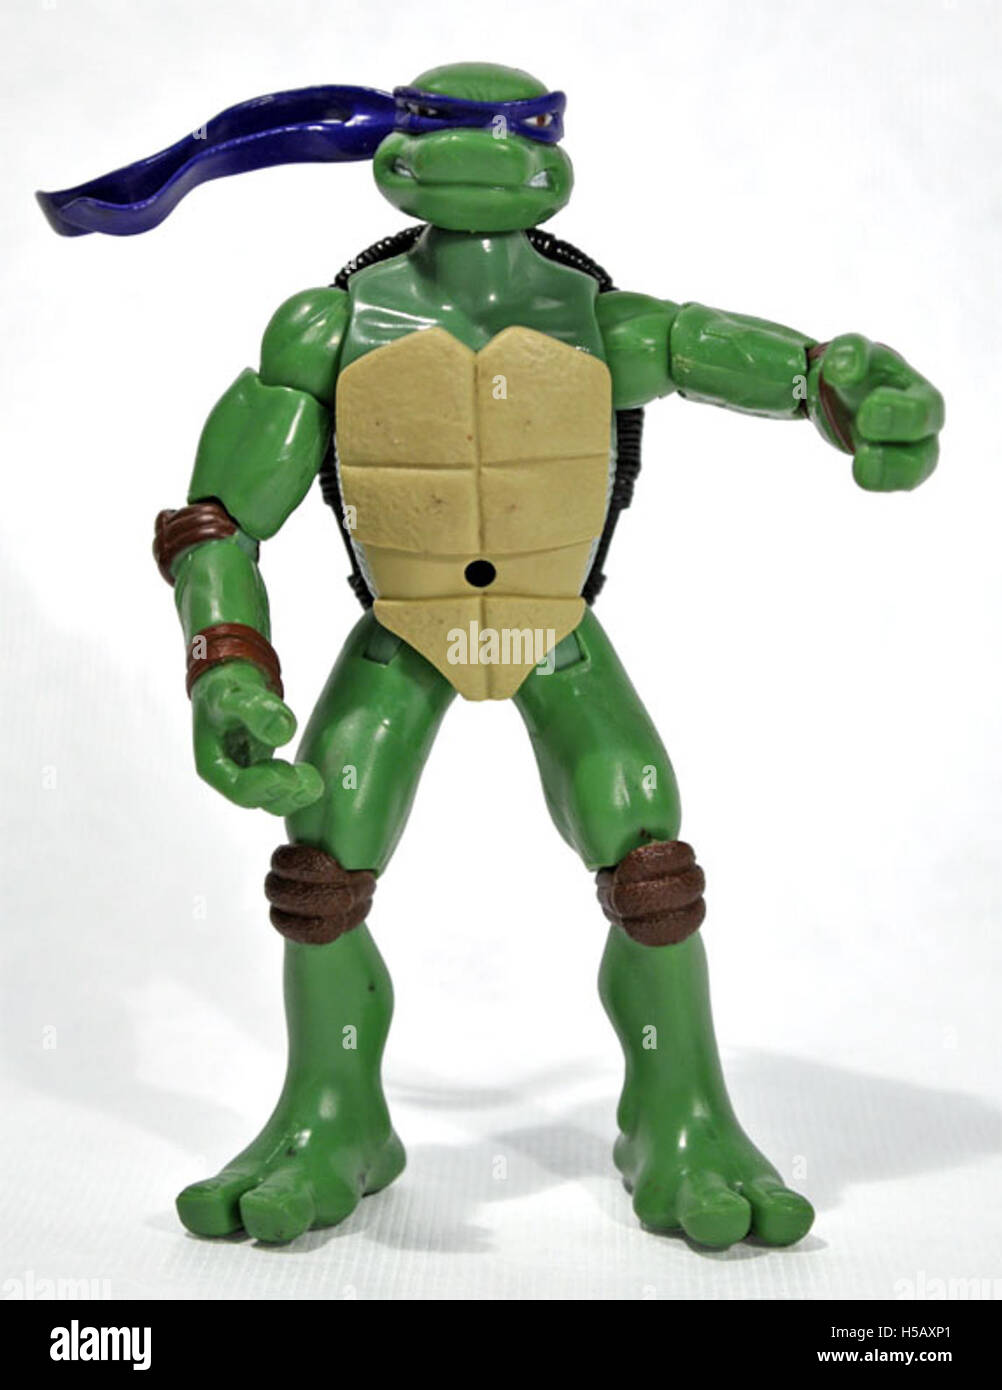 https://c8.alamy.com/comp/H5AXP1/teenage-mutant-ninja-turtle-toy-H5AXP1.jpg